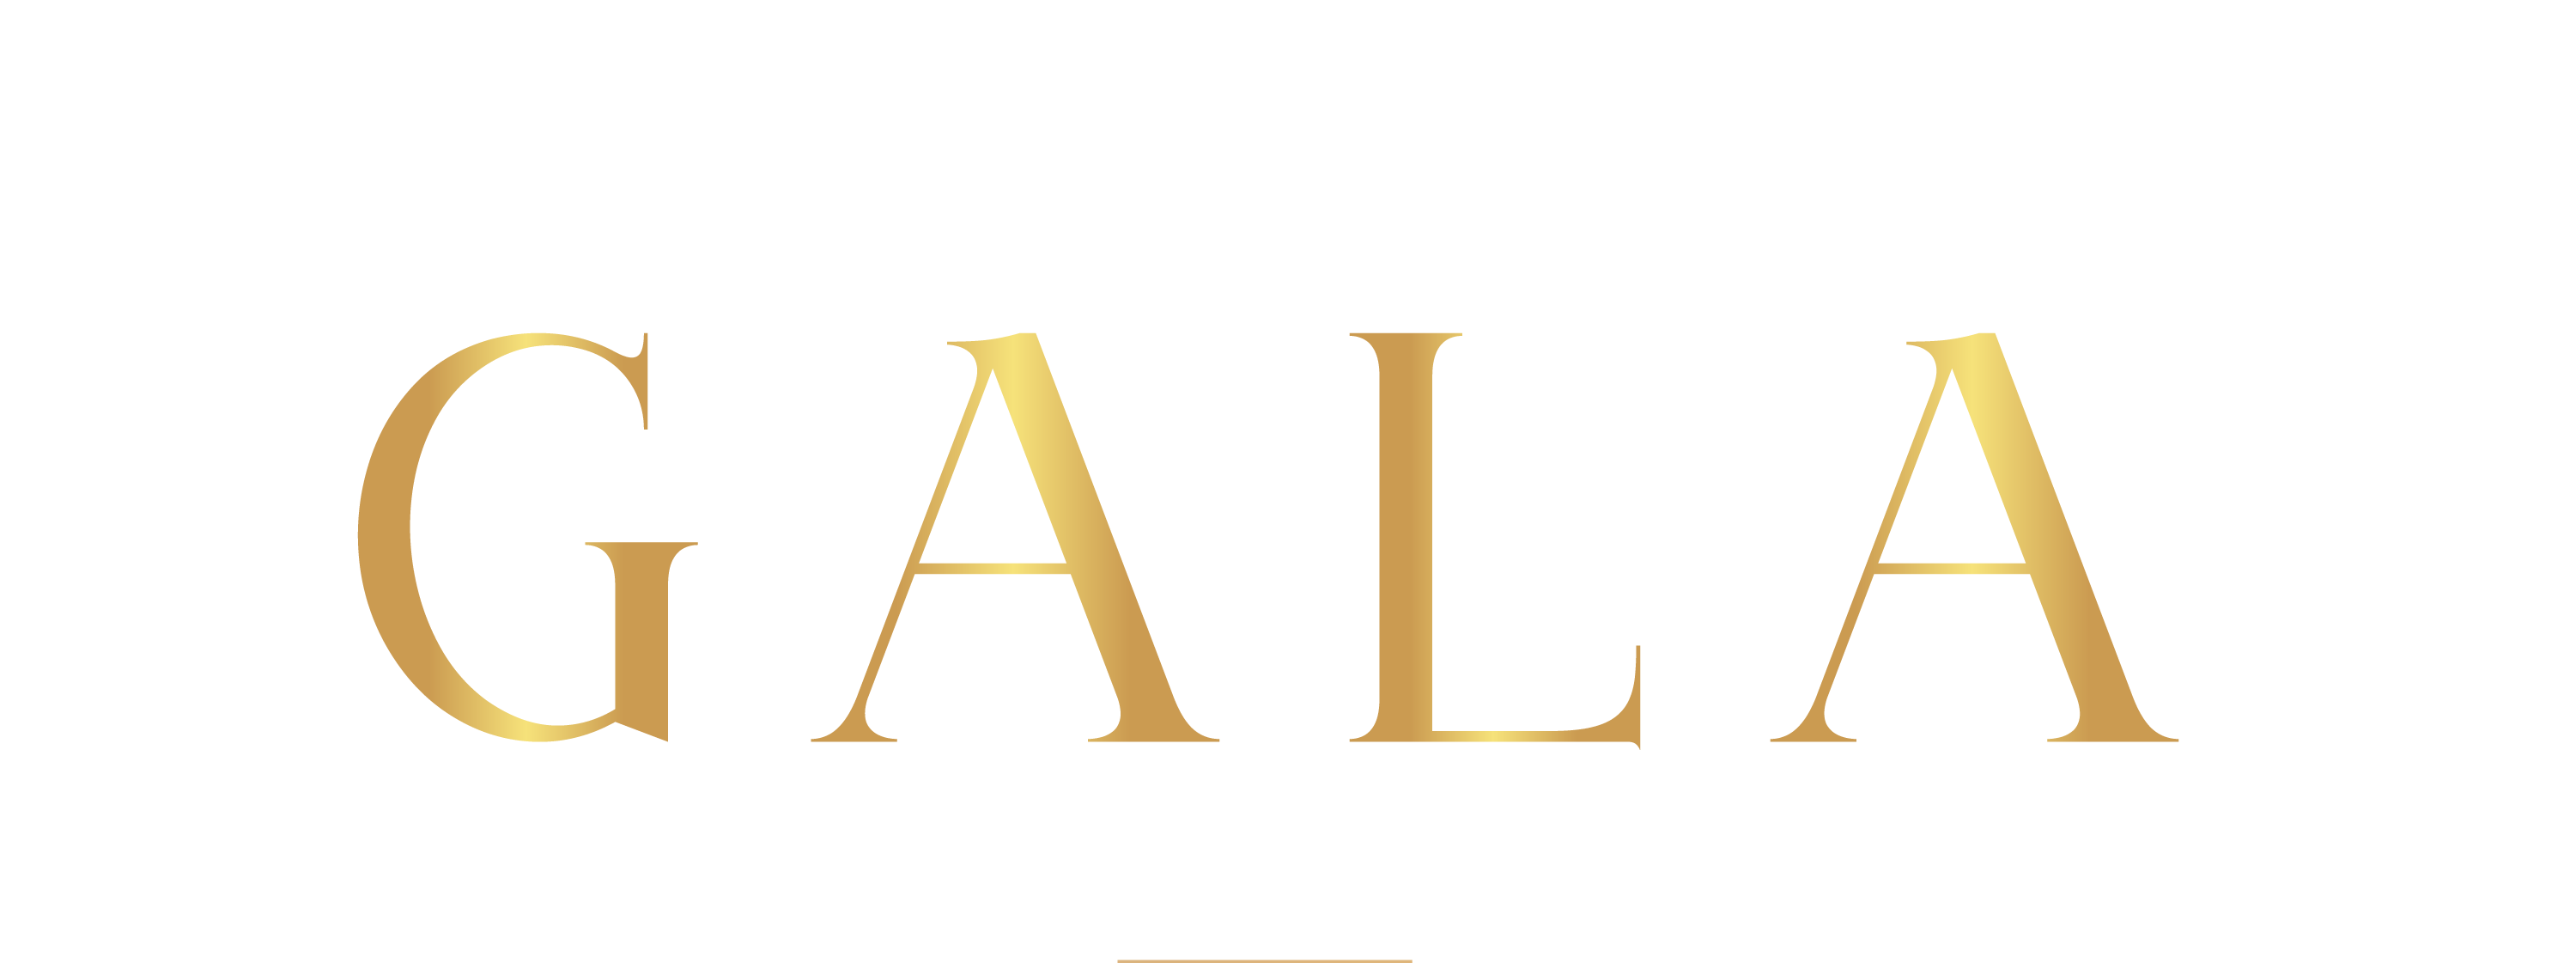 43rd Anniversary Gala